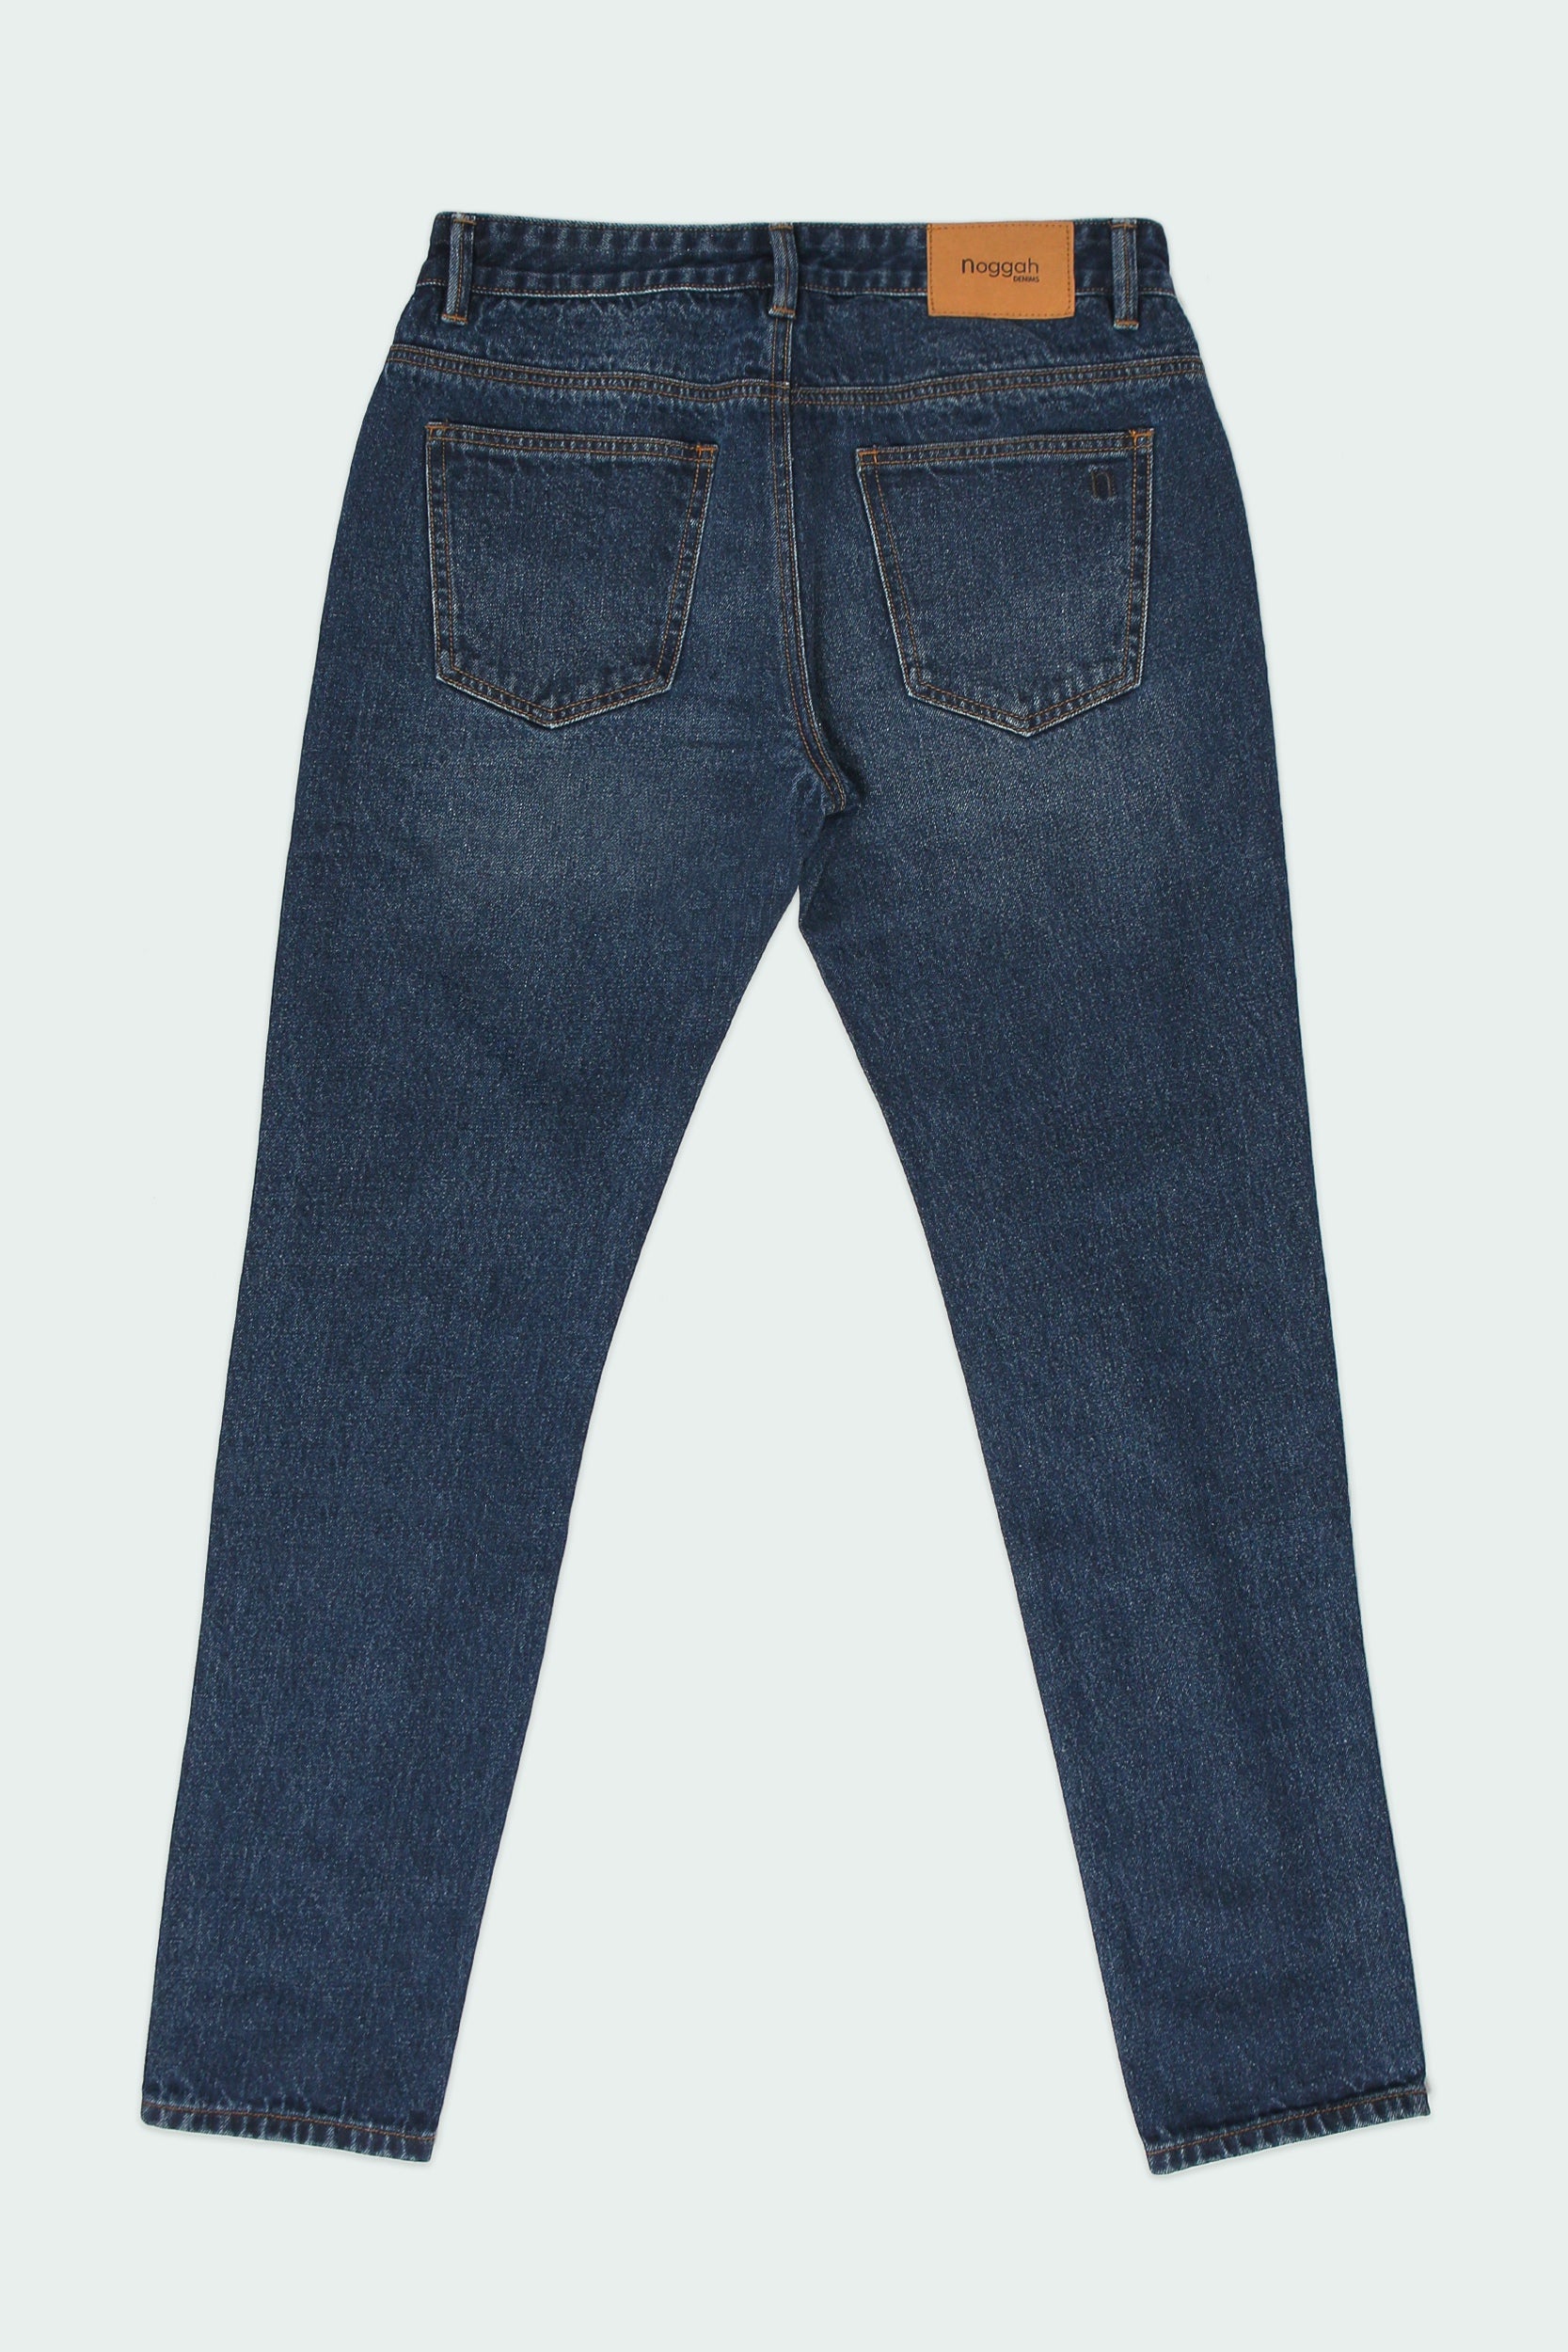 BlueDenim High Waist Jeans  Buy Online  Skin Friendly  Titapu